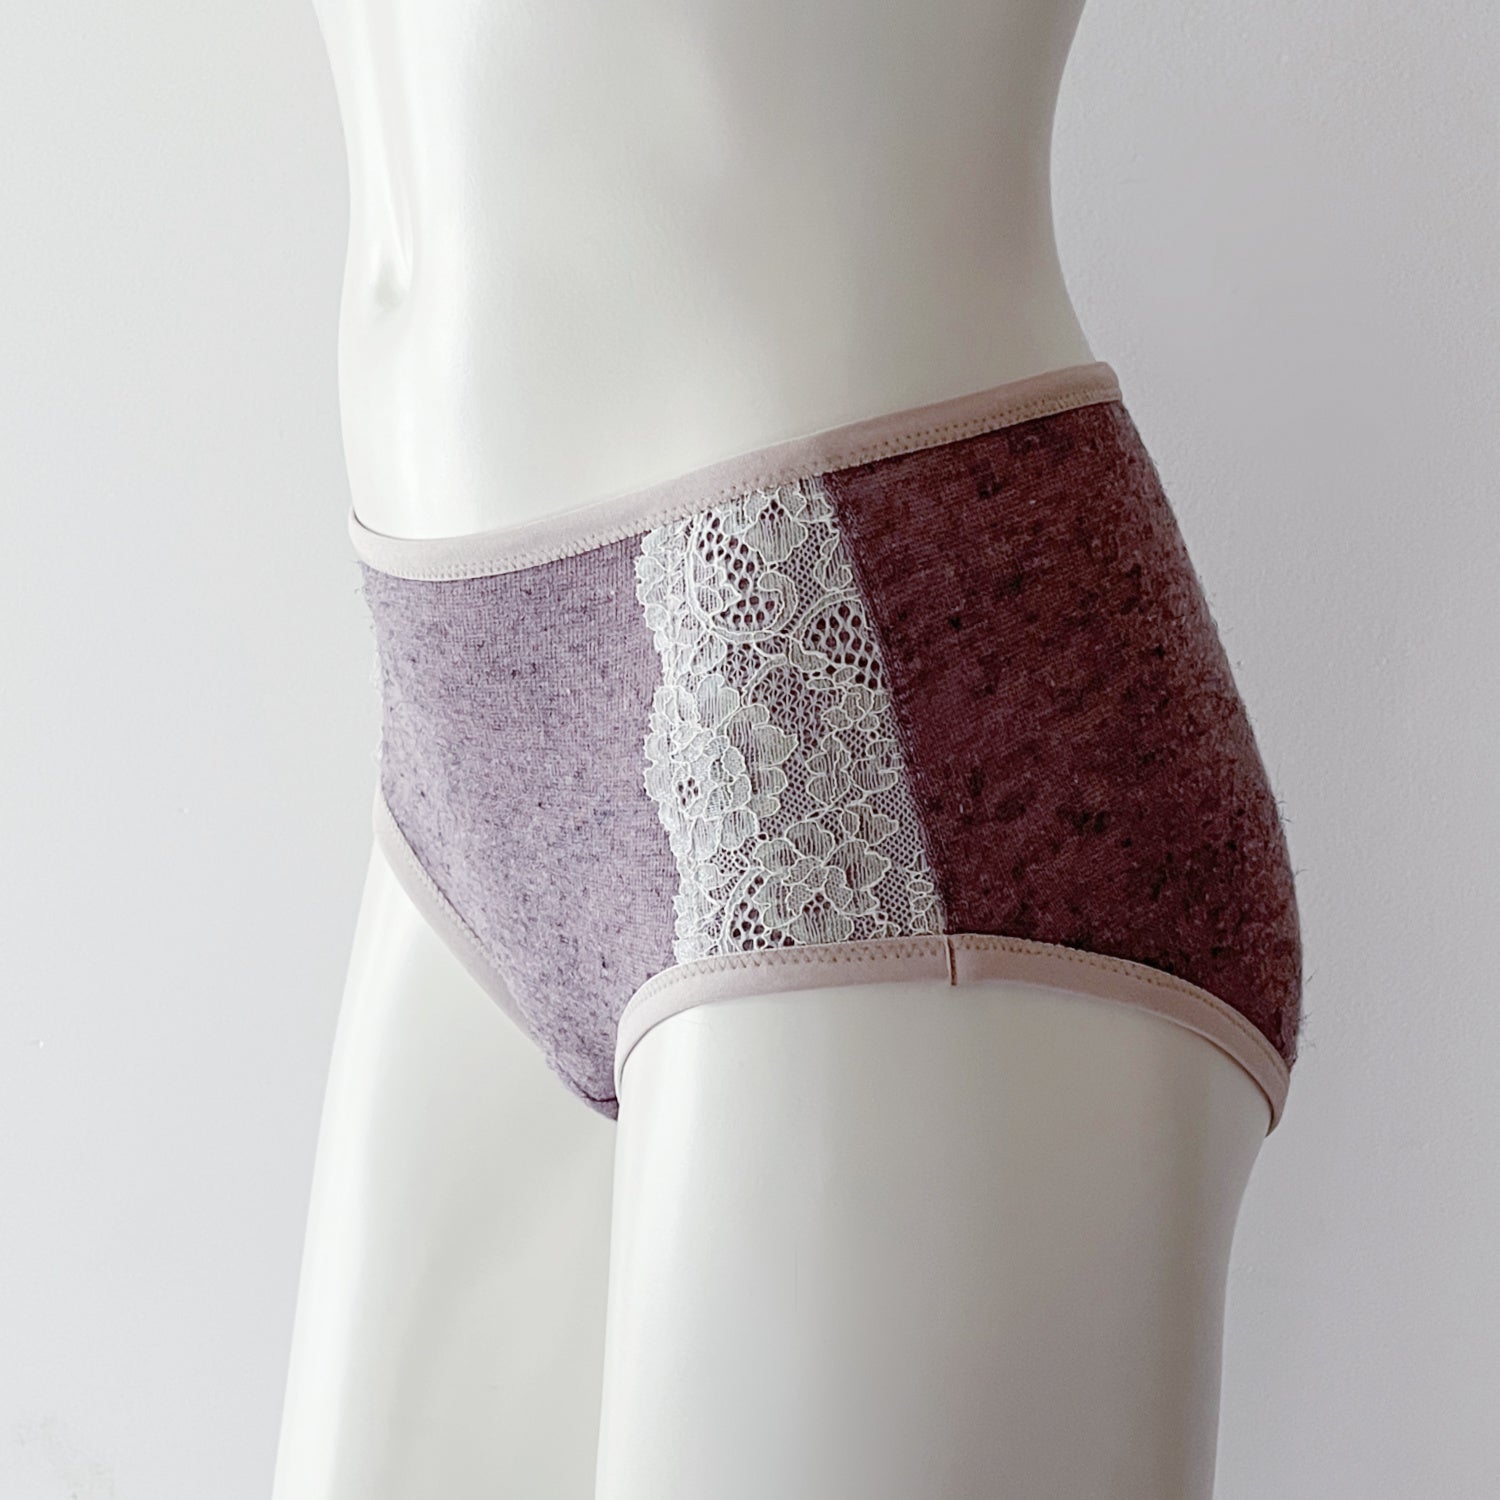 Shop Linen panty underwear brief | Buy 100% linen underwear for women | Made in Canada linen lingerie + clothing shop | Econica